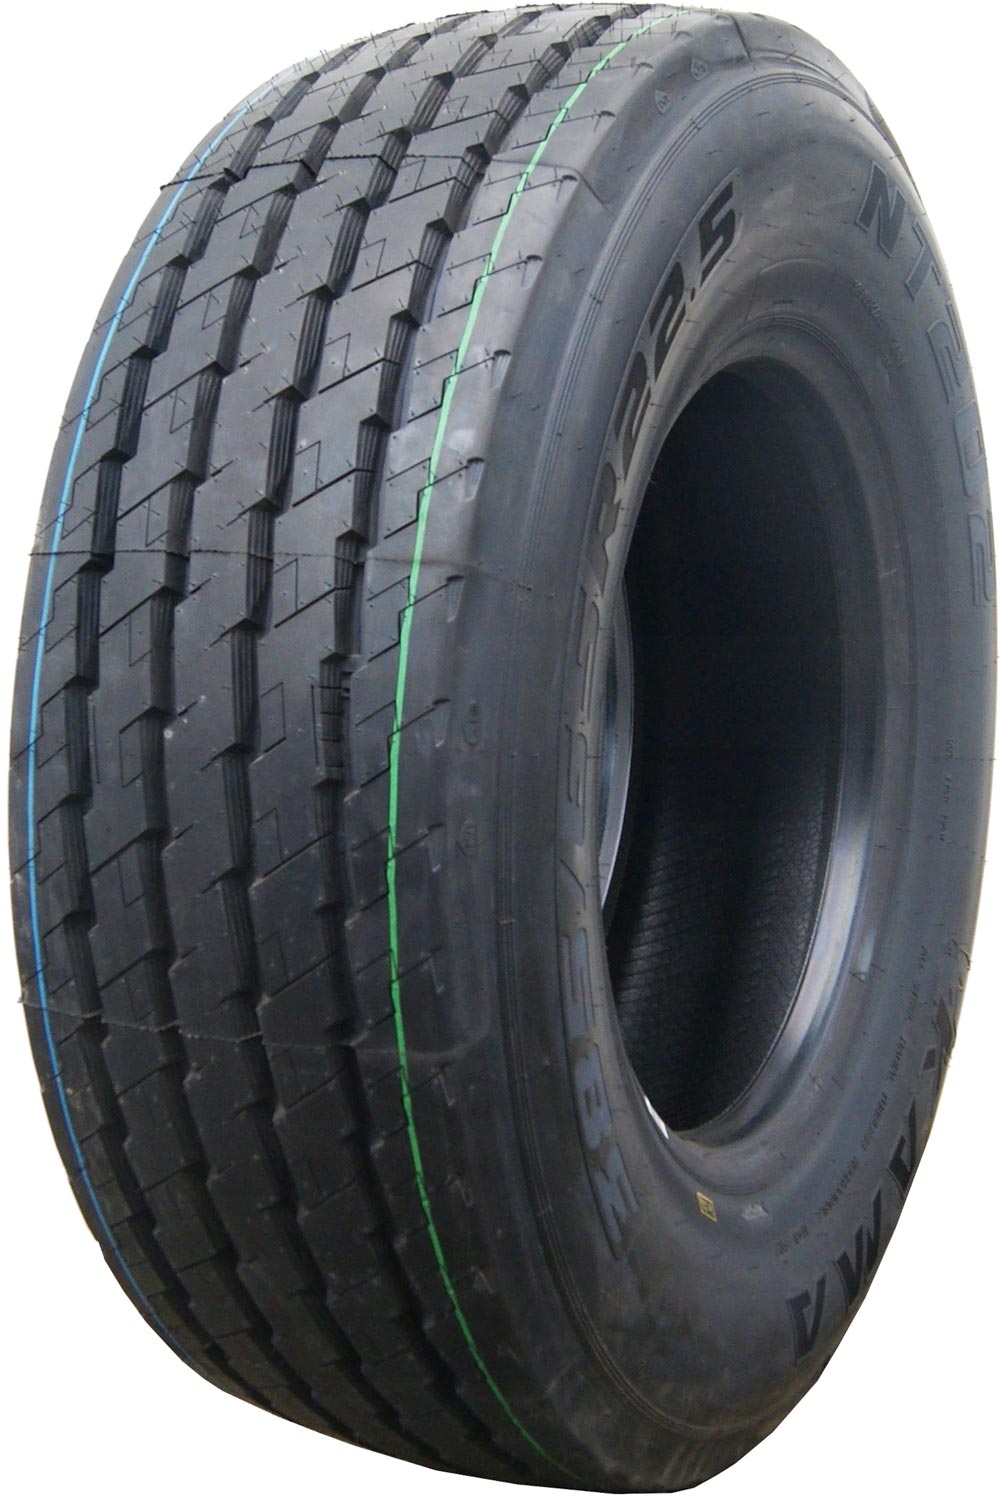 product_type-heavy_tires KAMA NT202 245/70 R19.5 141J